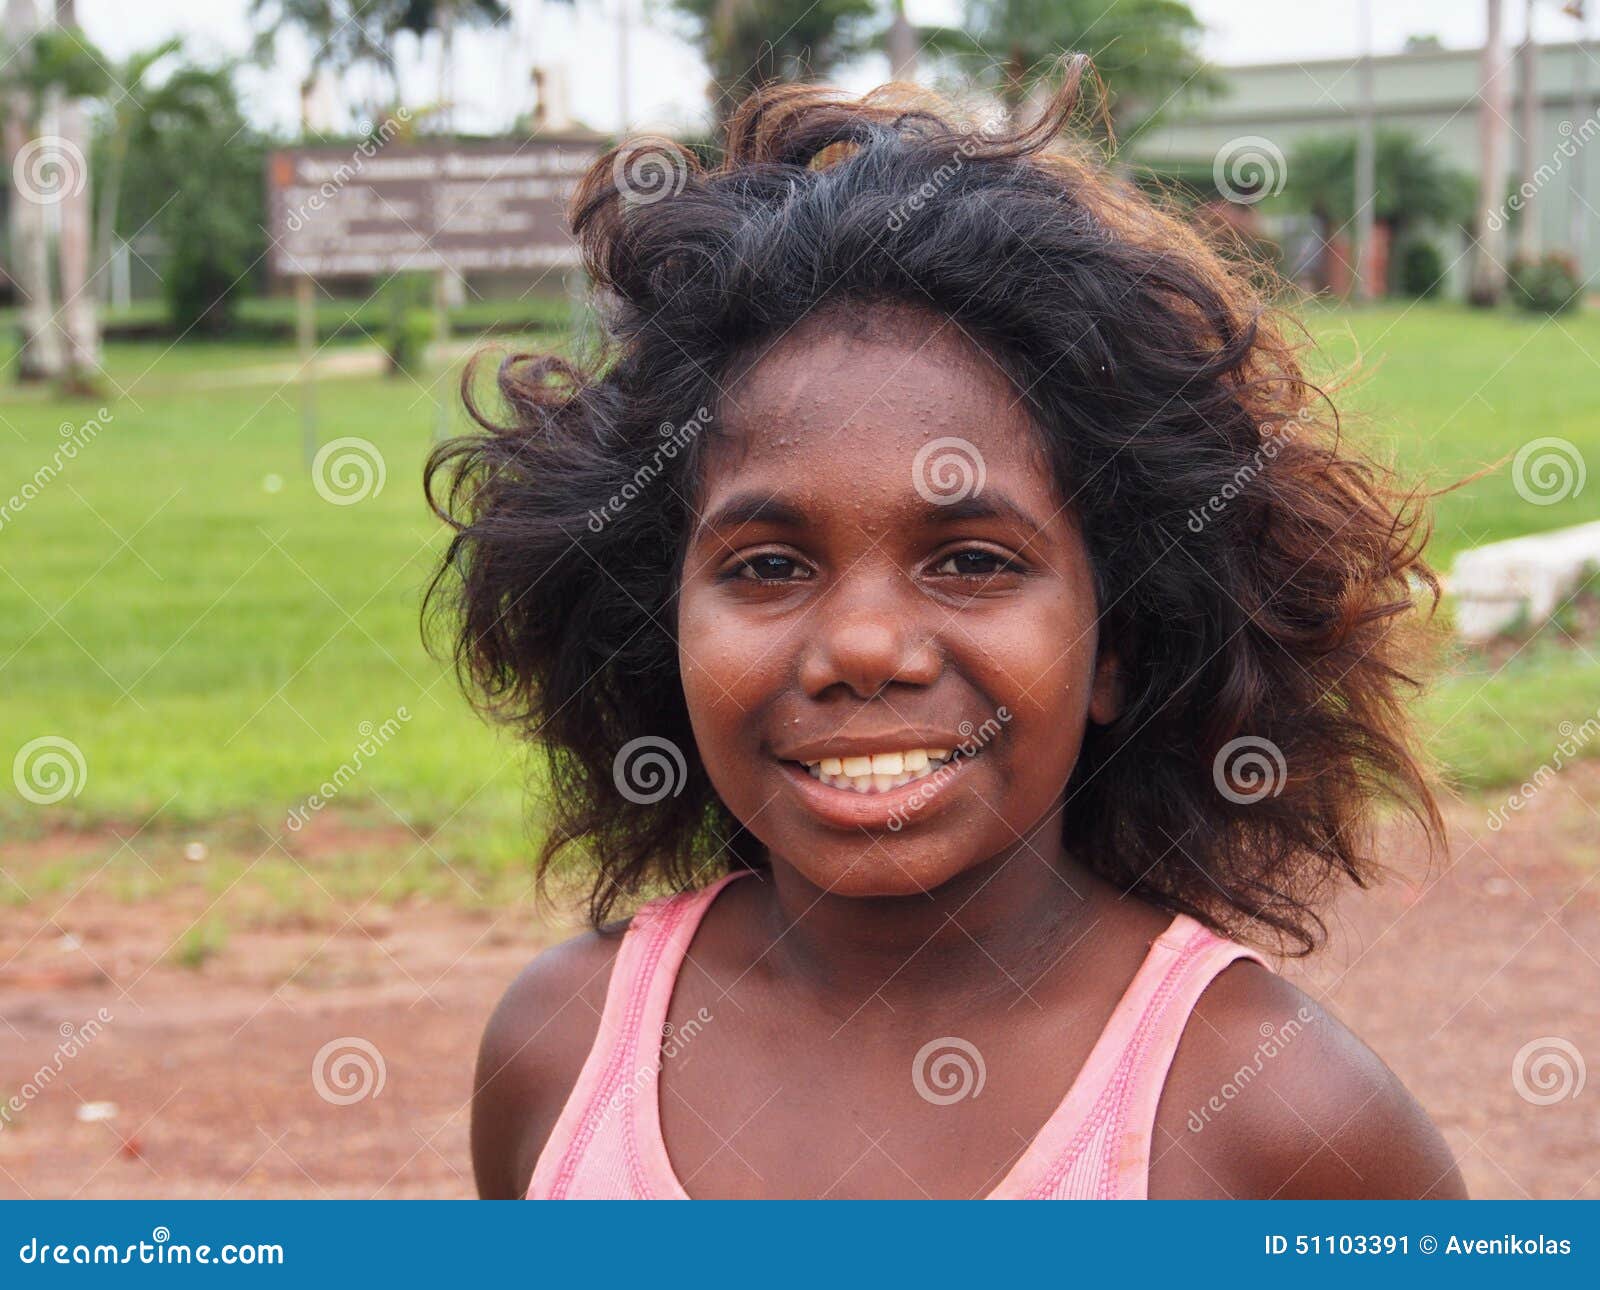 kaste støv i øjnene grube Rosefarve 2,043 Aboriginal Girl Photos - Free & Royalty-Free Stock Photos from  Dreamstime